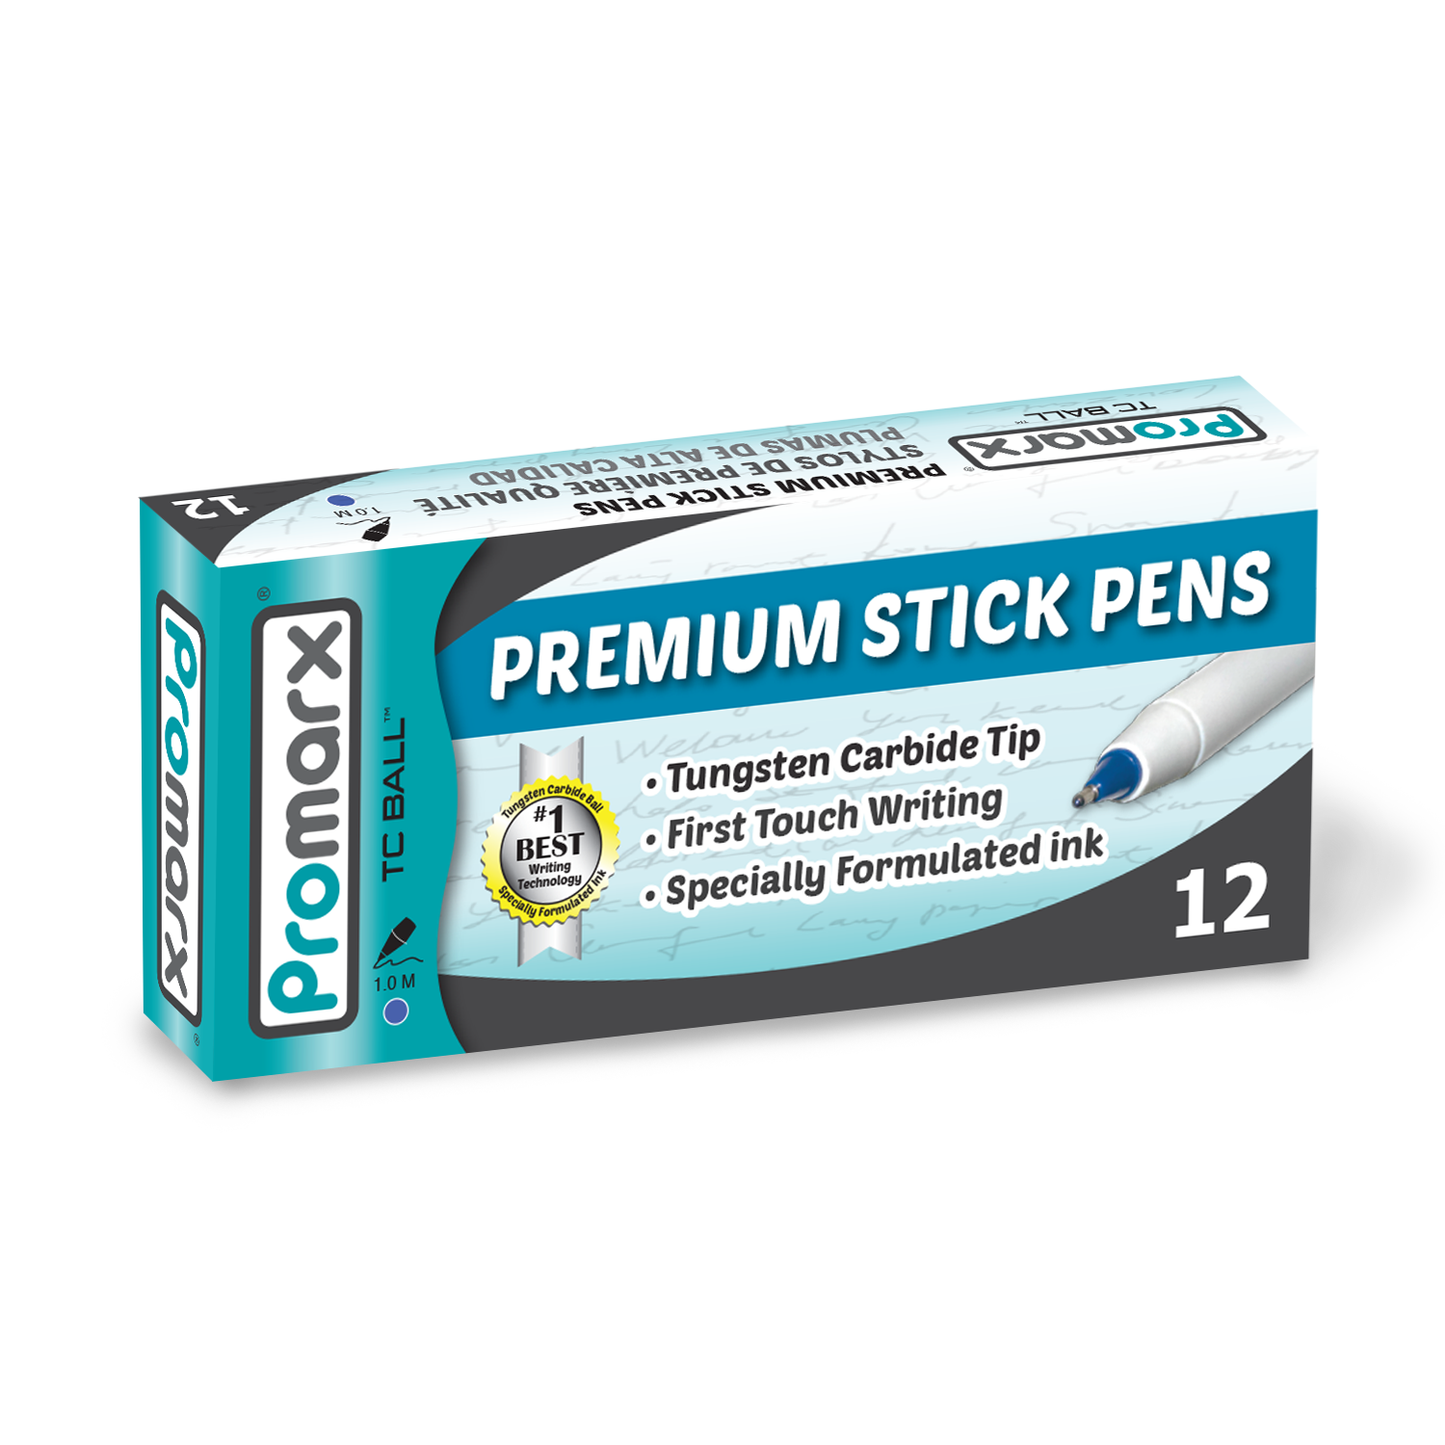 Fine Stick Pens TC Ball 0.7mm 12 ct